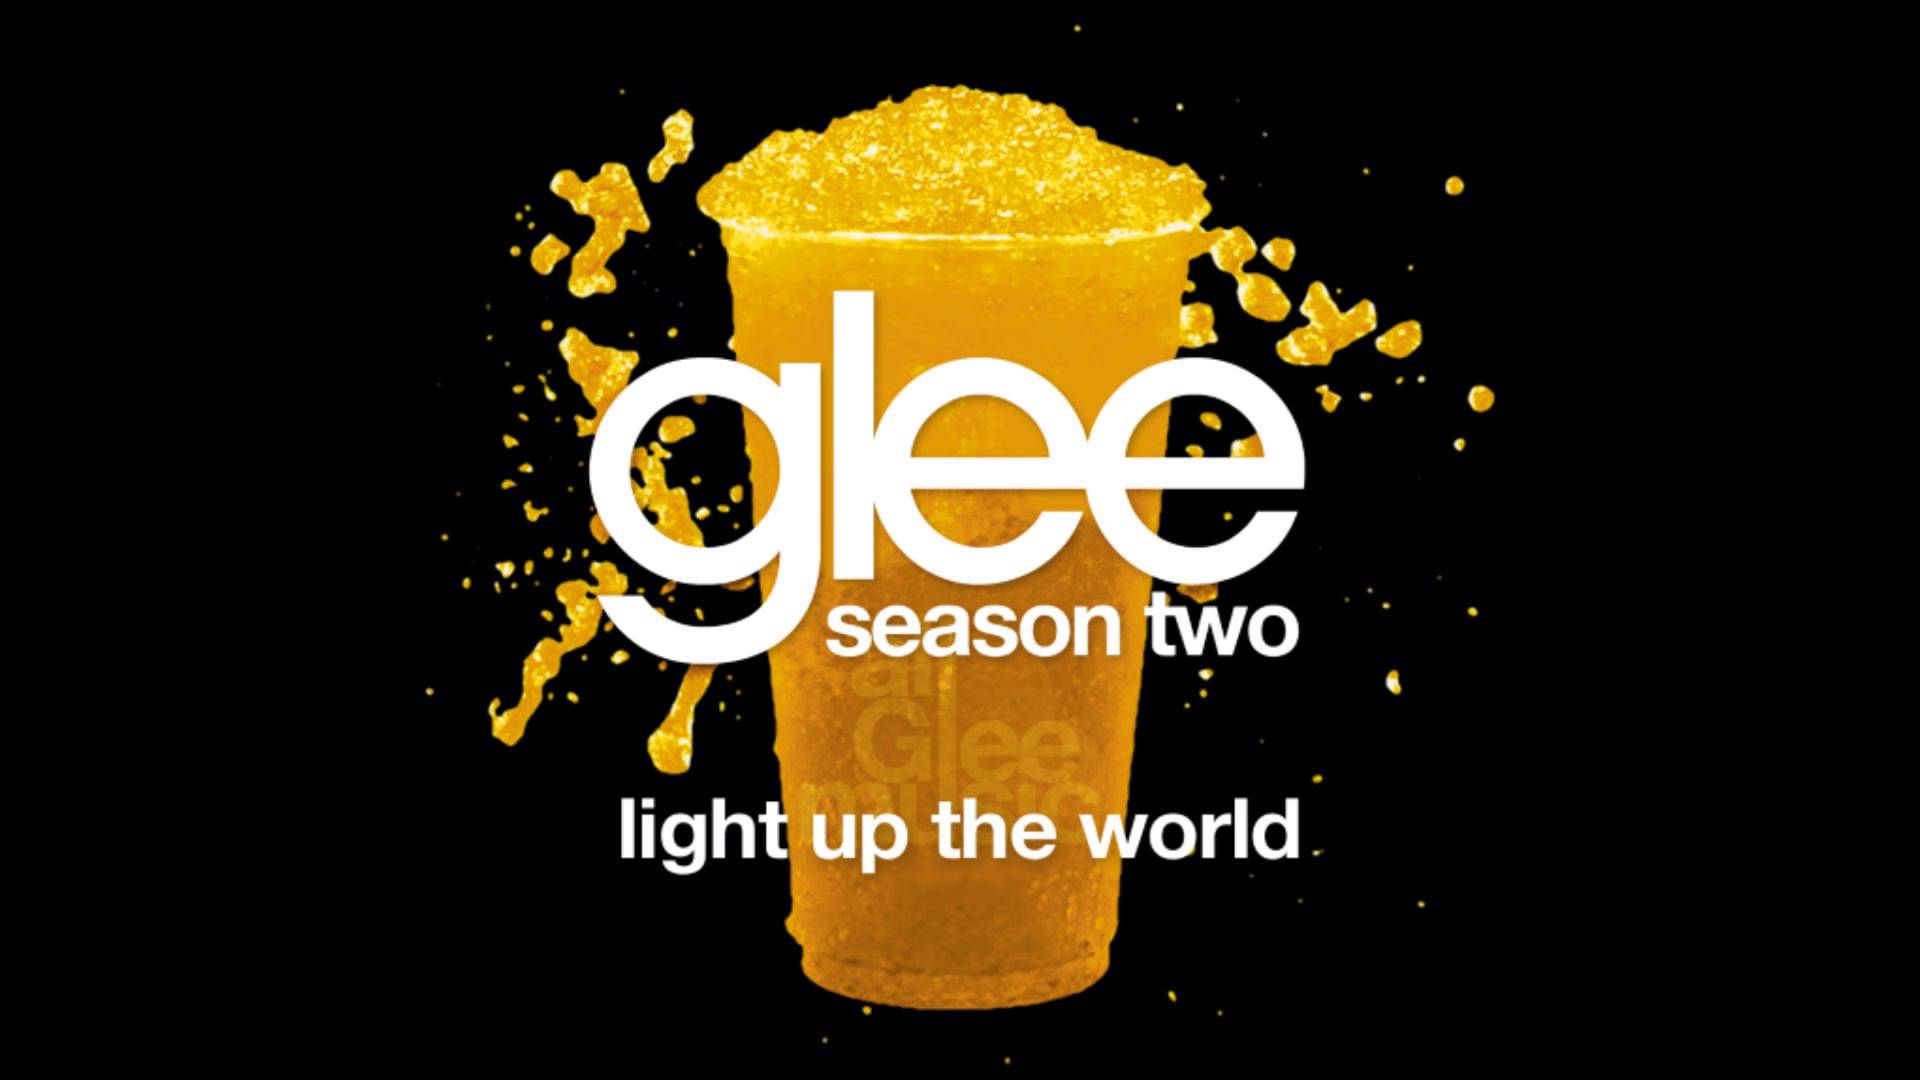 Glee Cast - Light Up the World